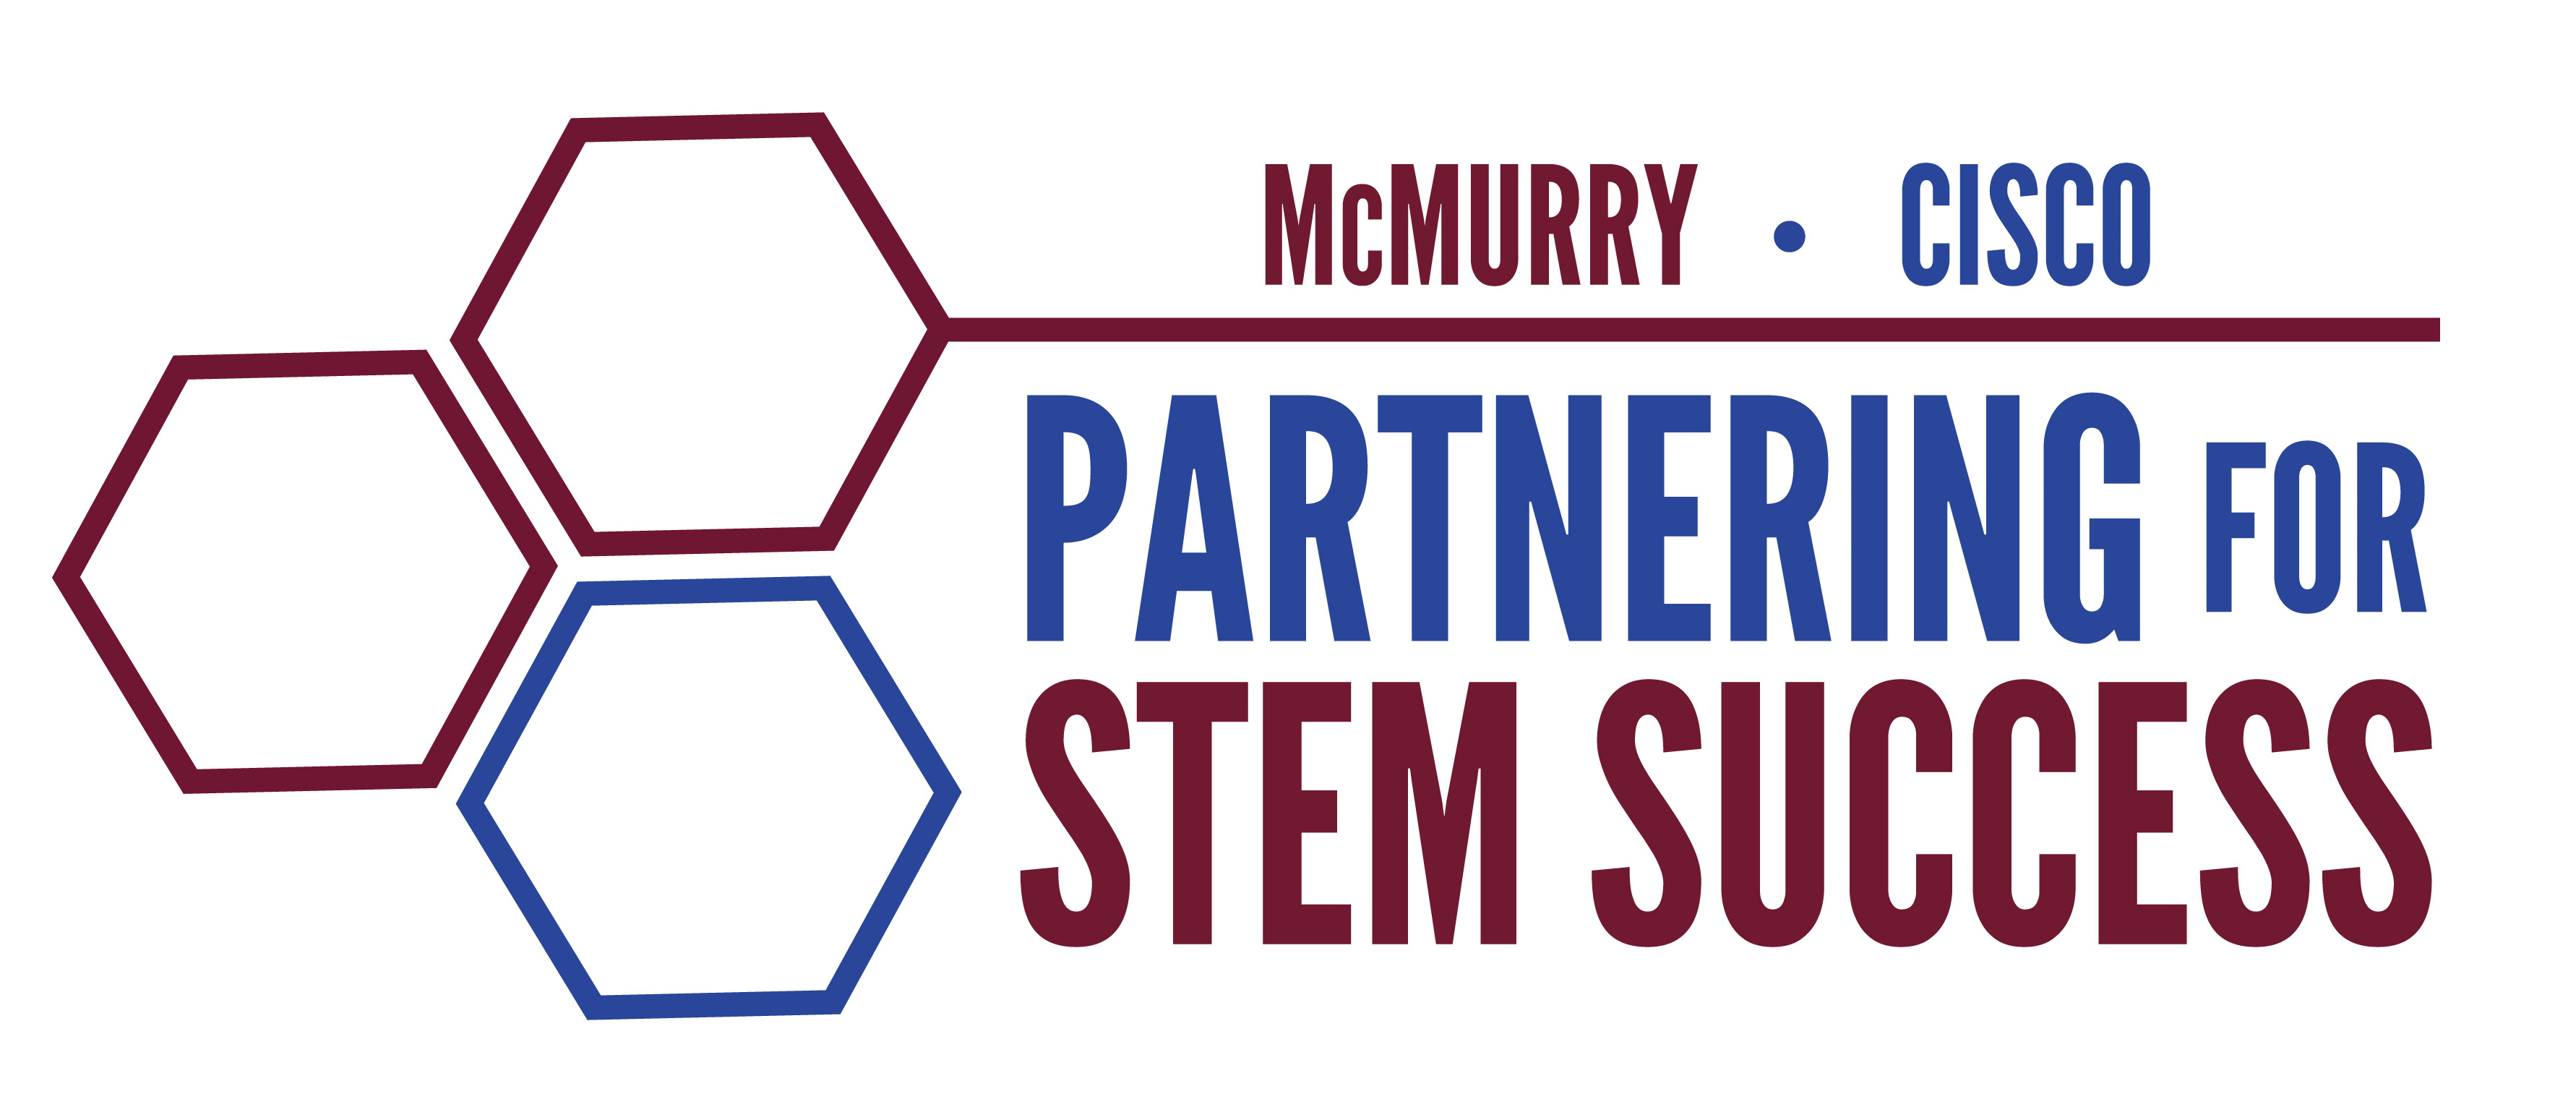 Partnering for STEM Success logo